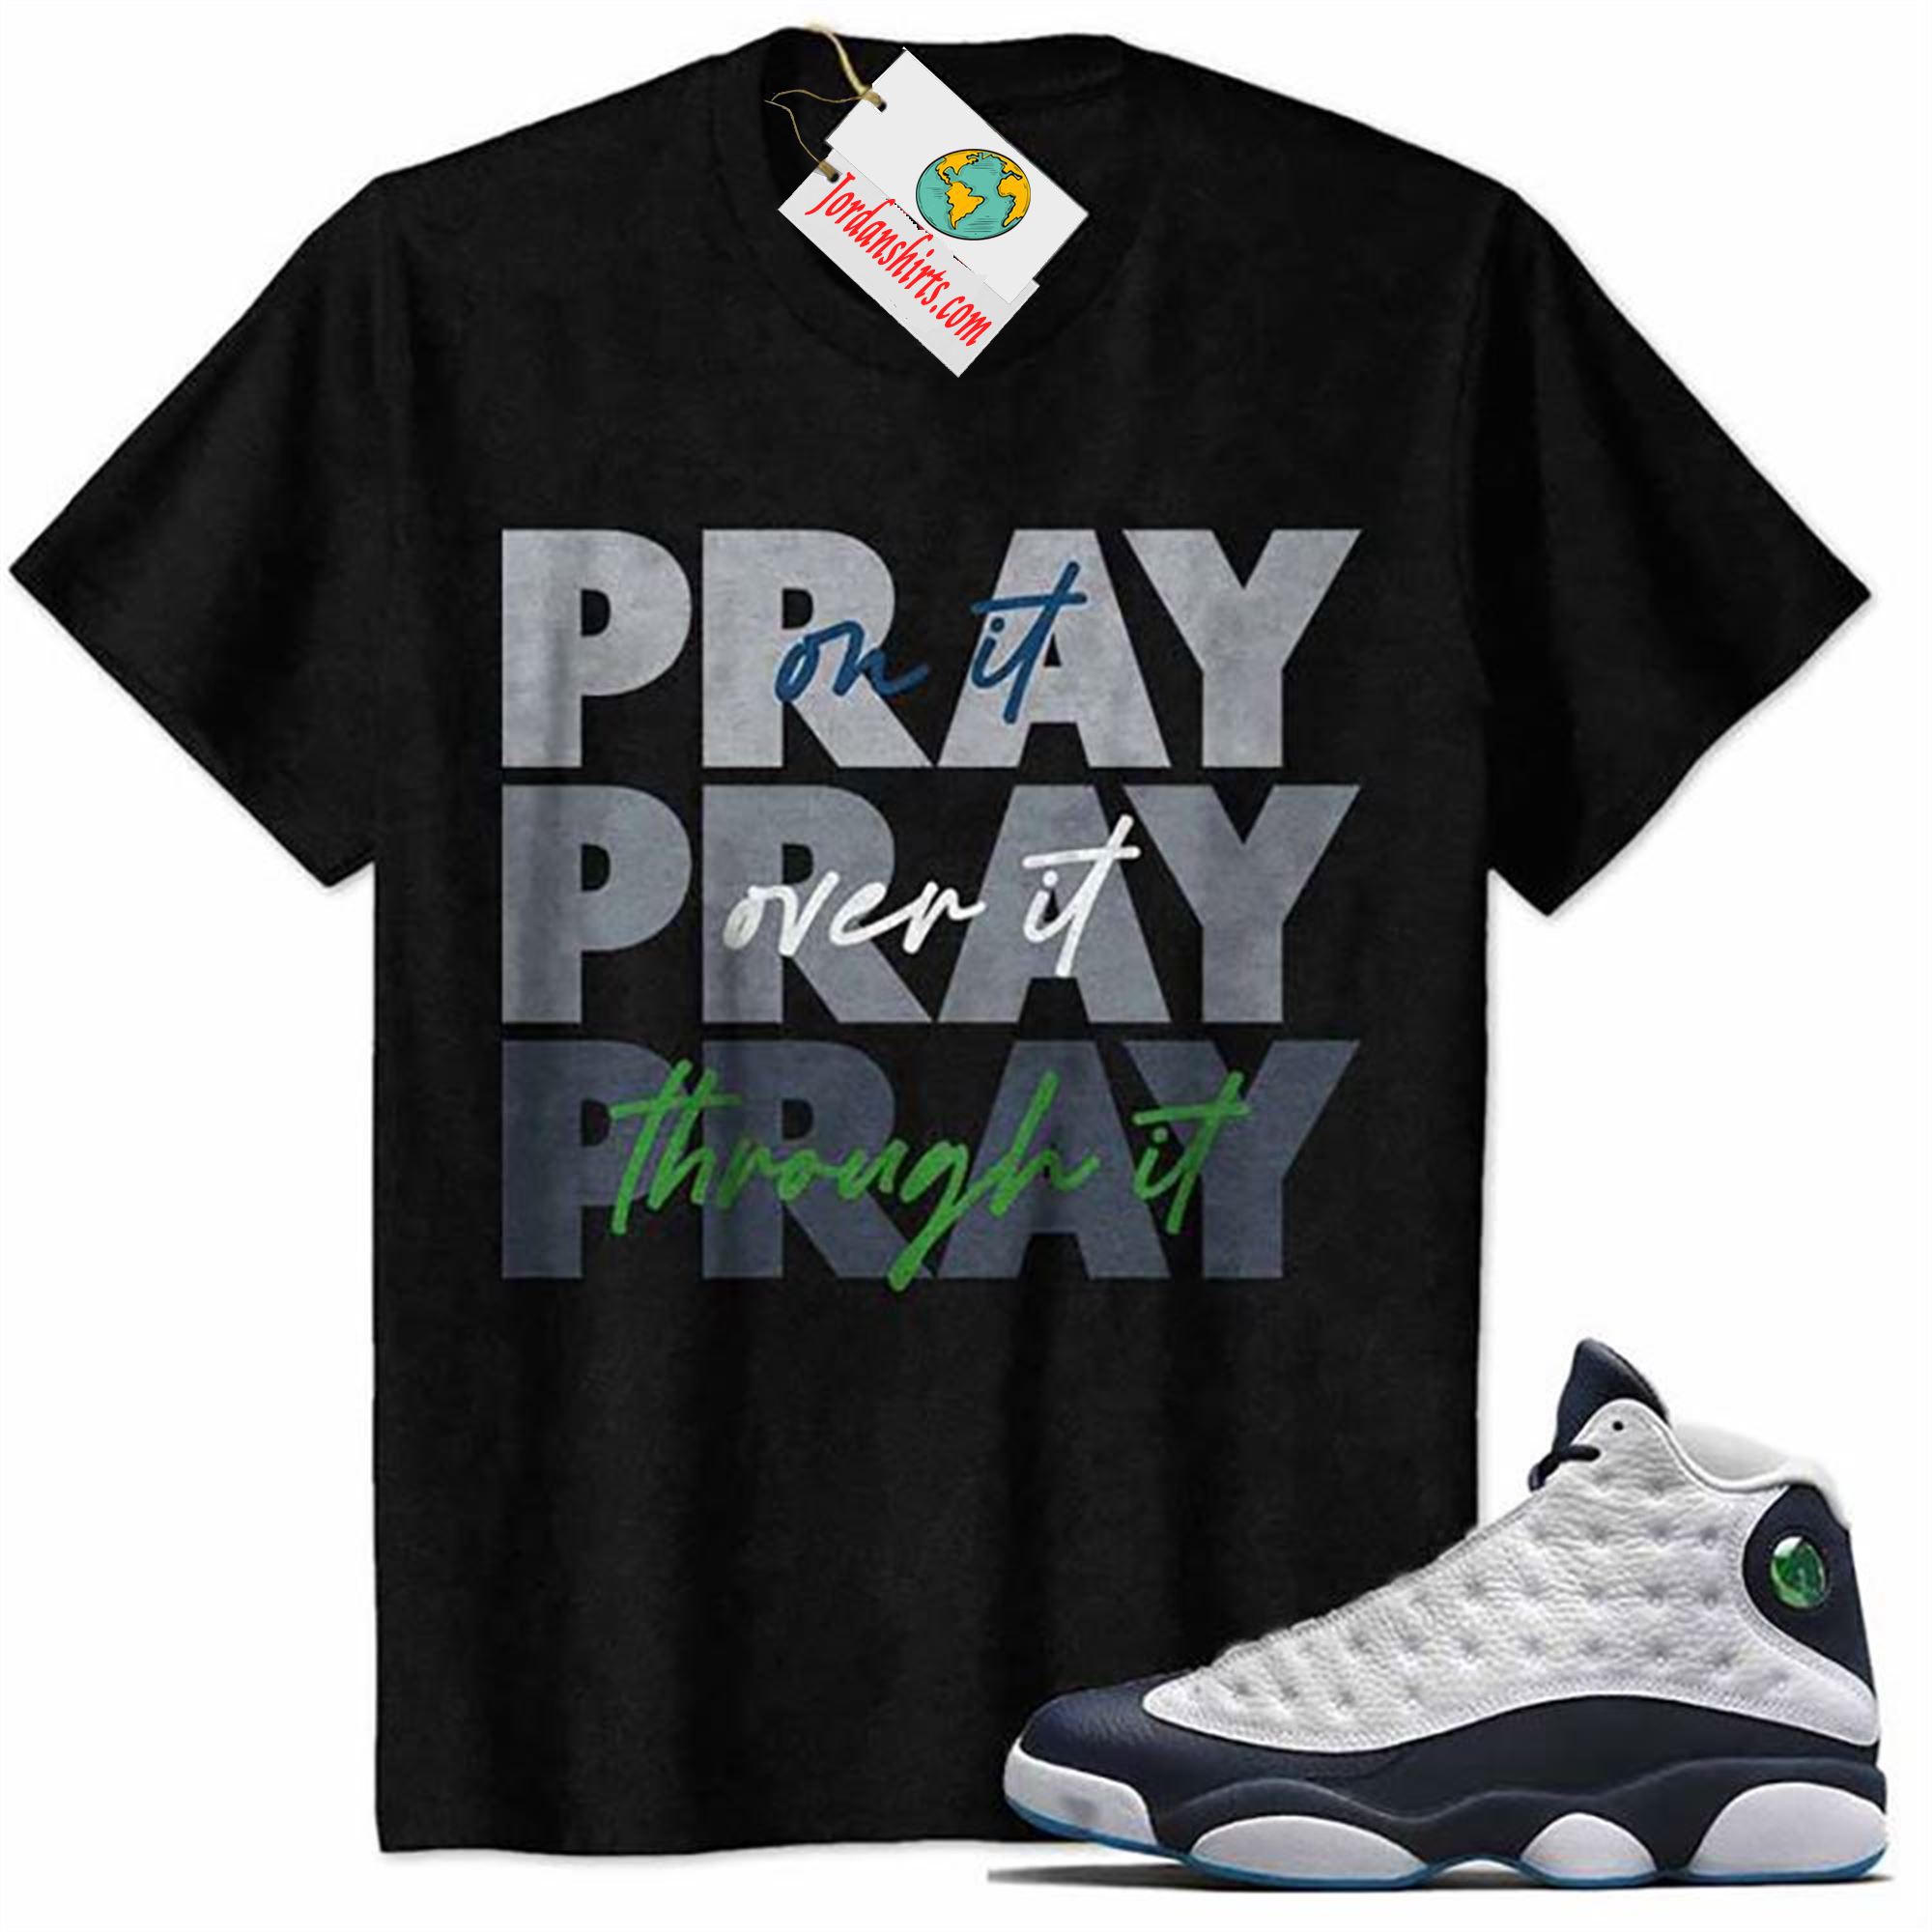 Jordan 13 Shirt, Pray On It Pray Over It Pray Through It Black Air Jordan 13 Obsidian 13s Size Up To 5xl